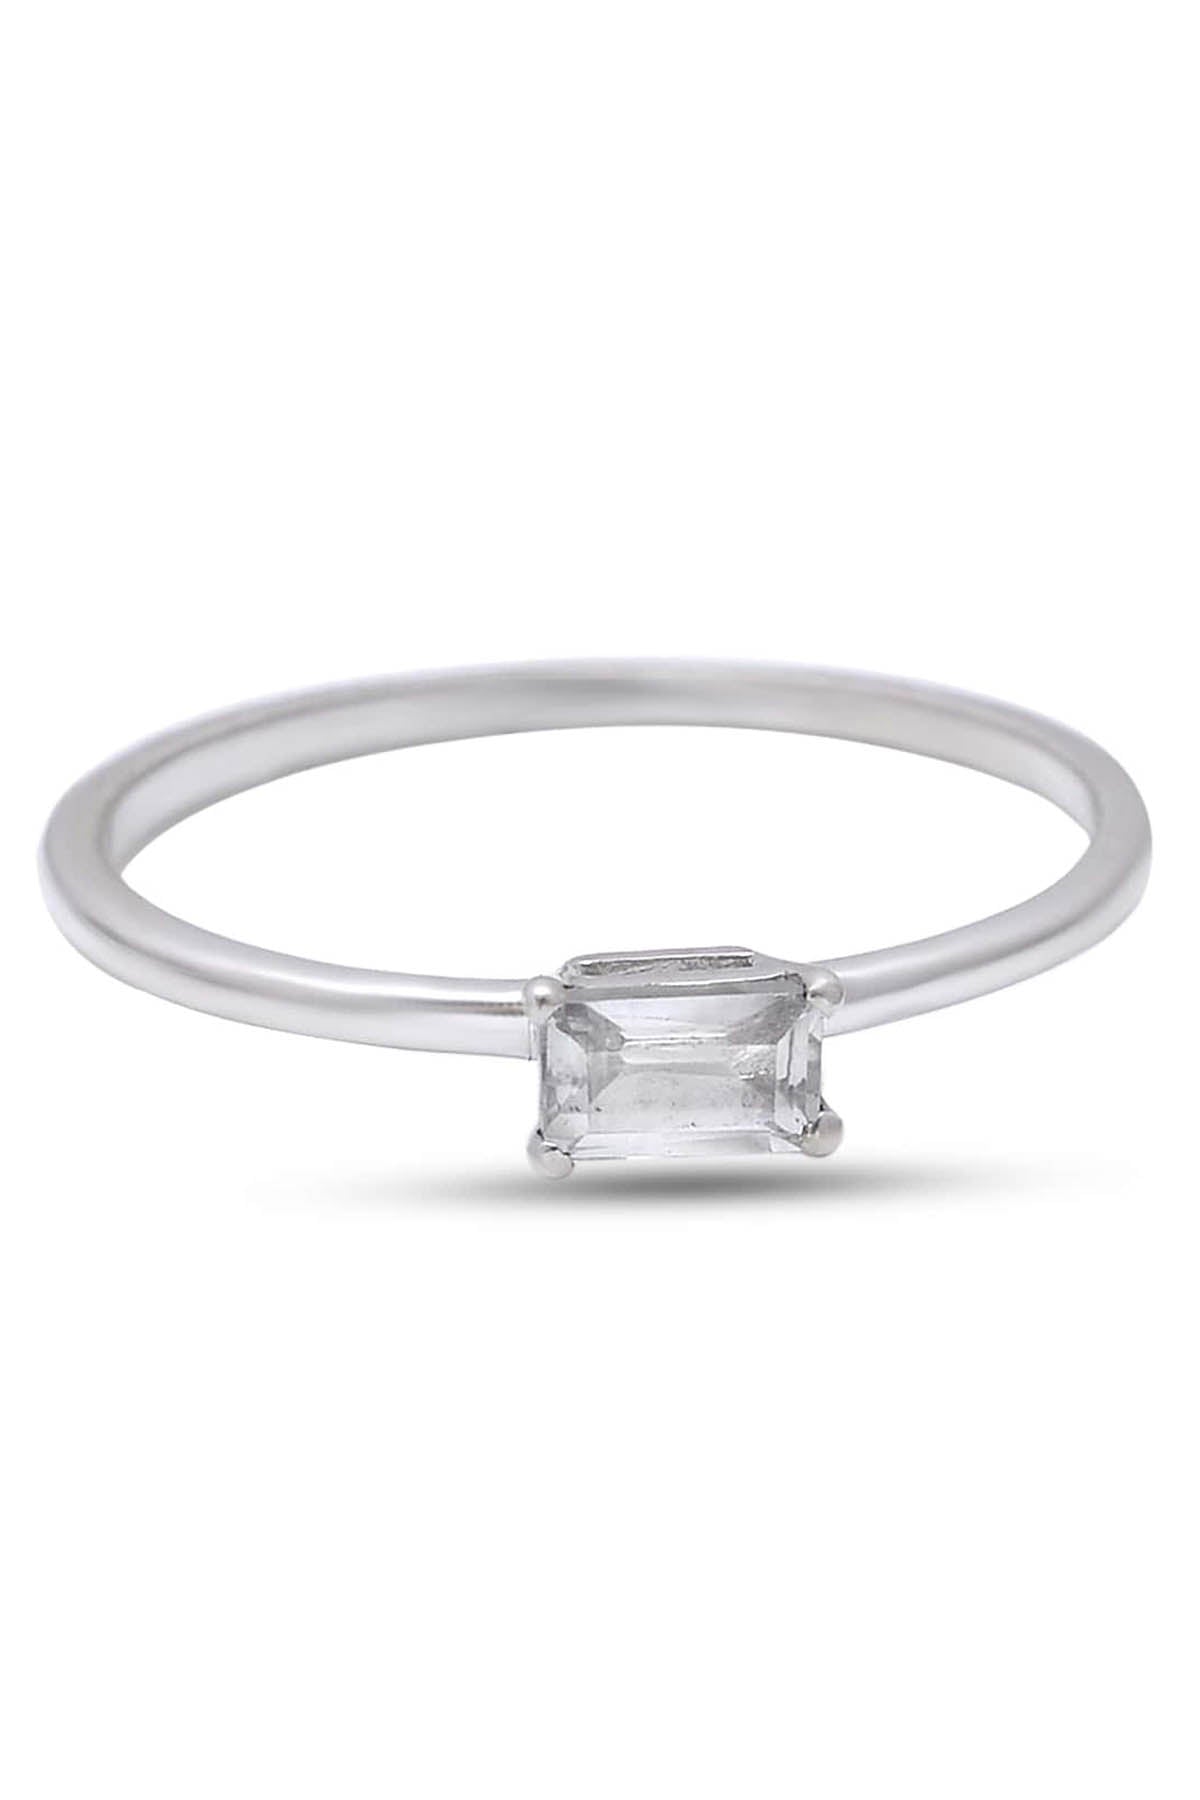 Natural Zircon Gemstone Ring